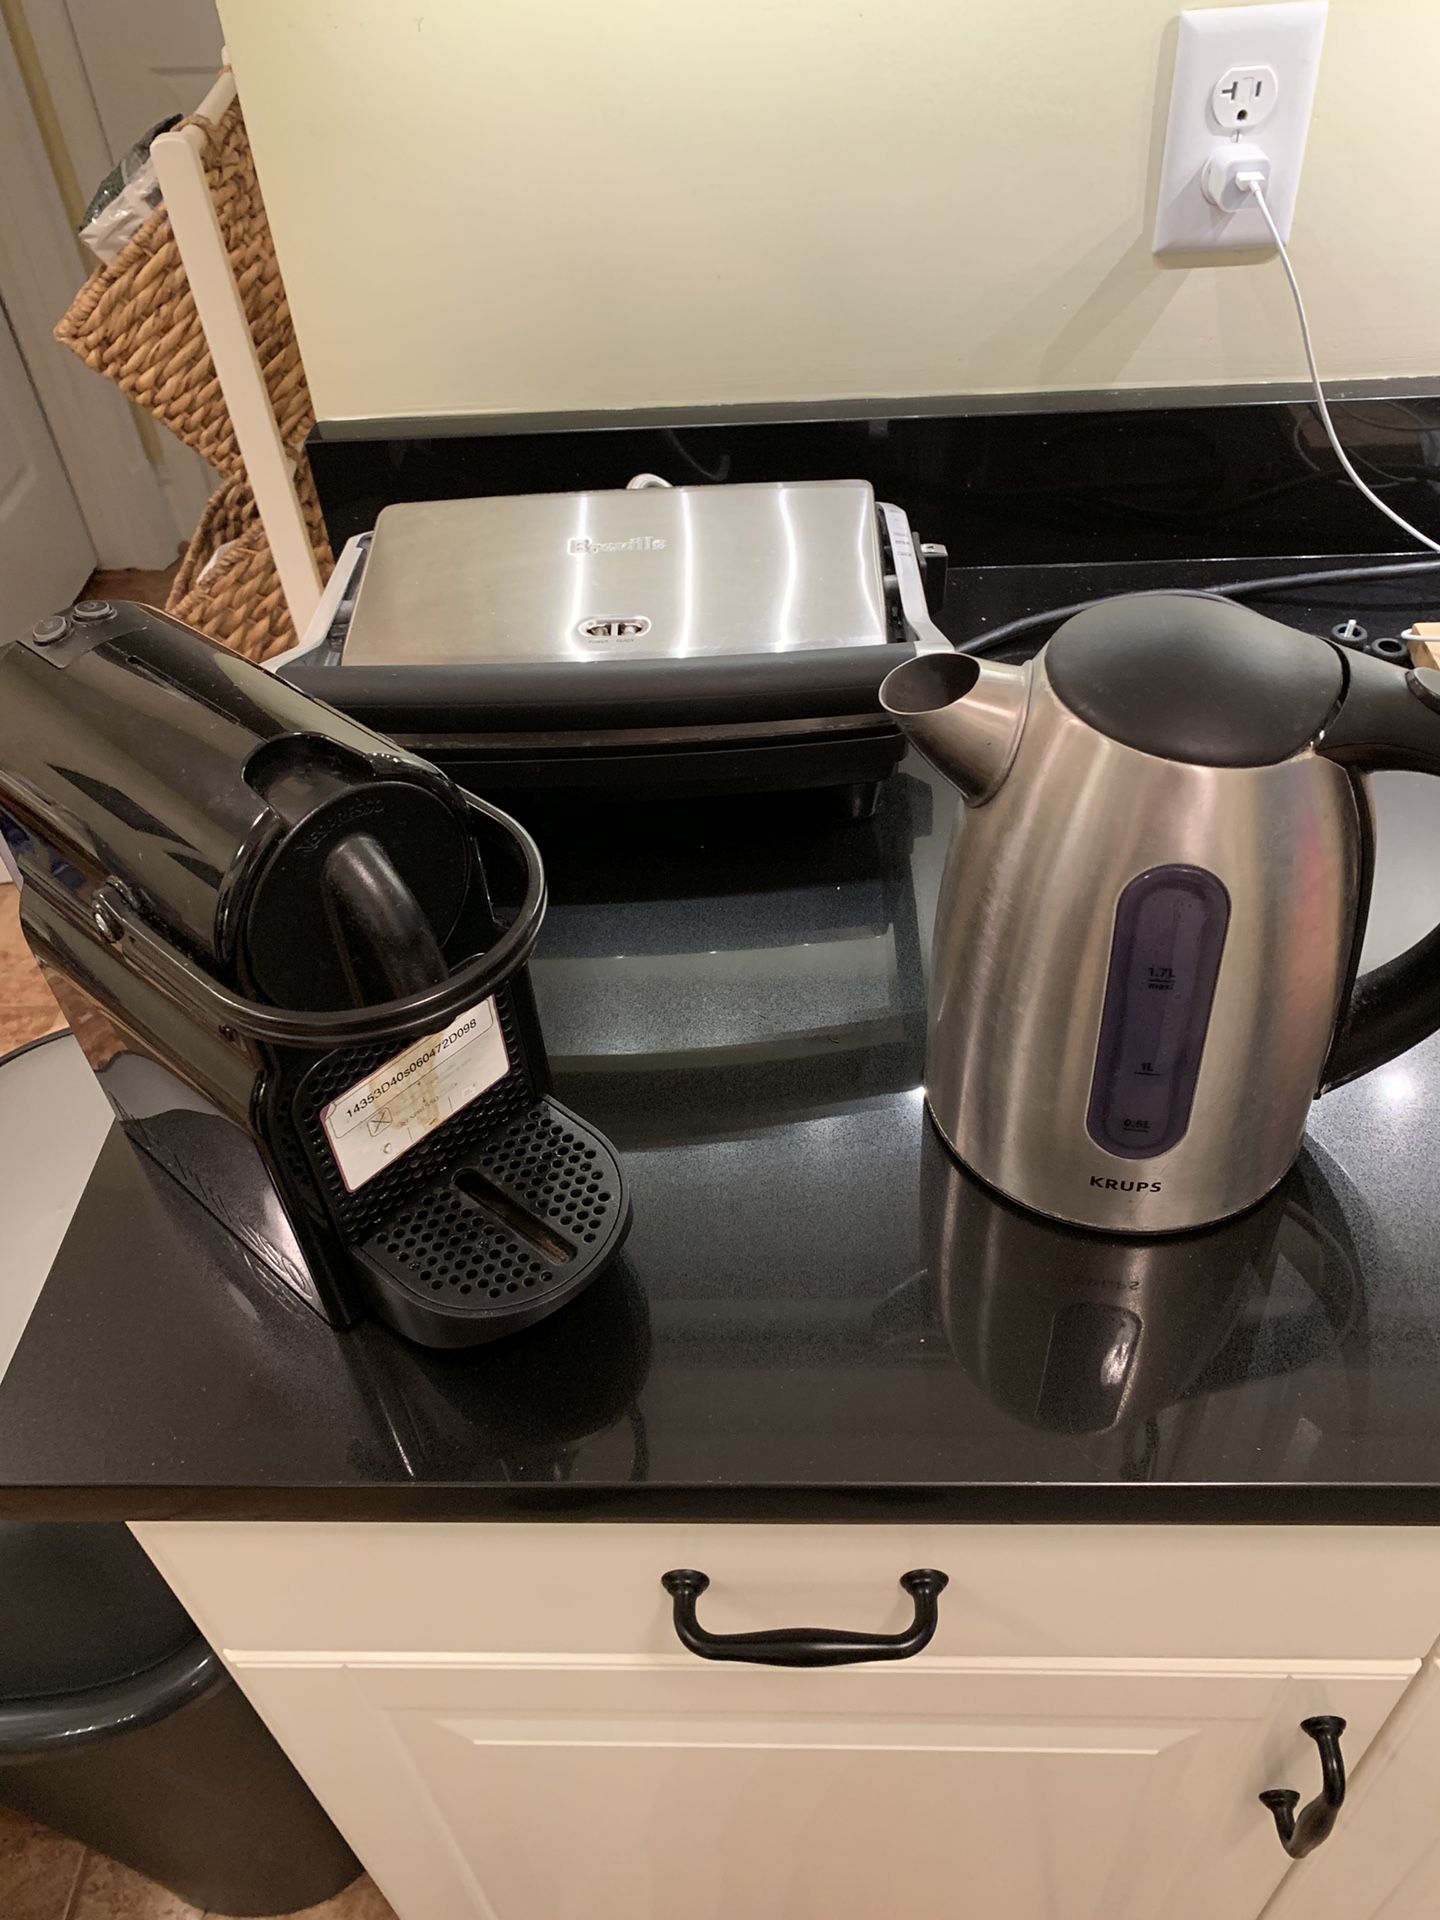 Small kitchen appliances bundle - Nespresso machine, Breville toaster and Krups kettle